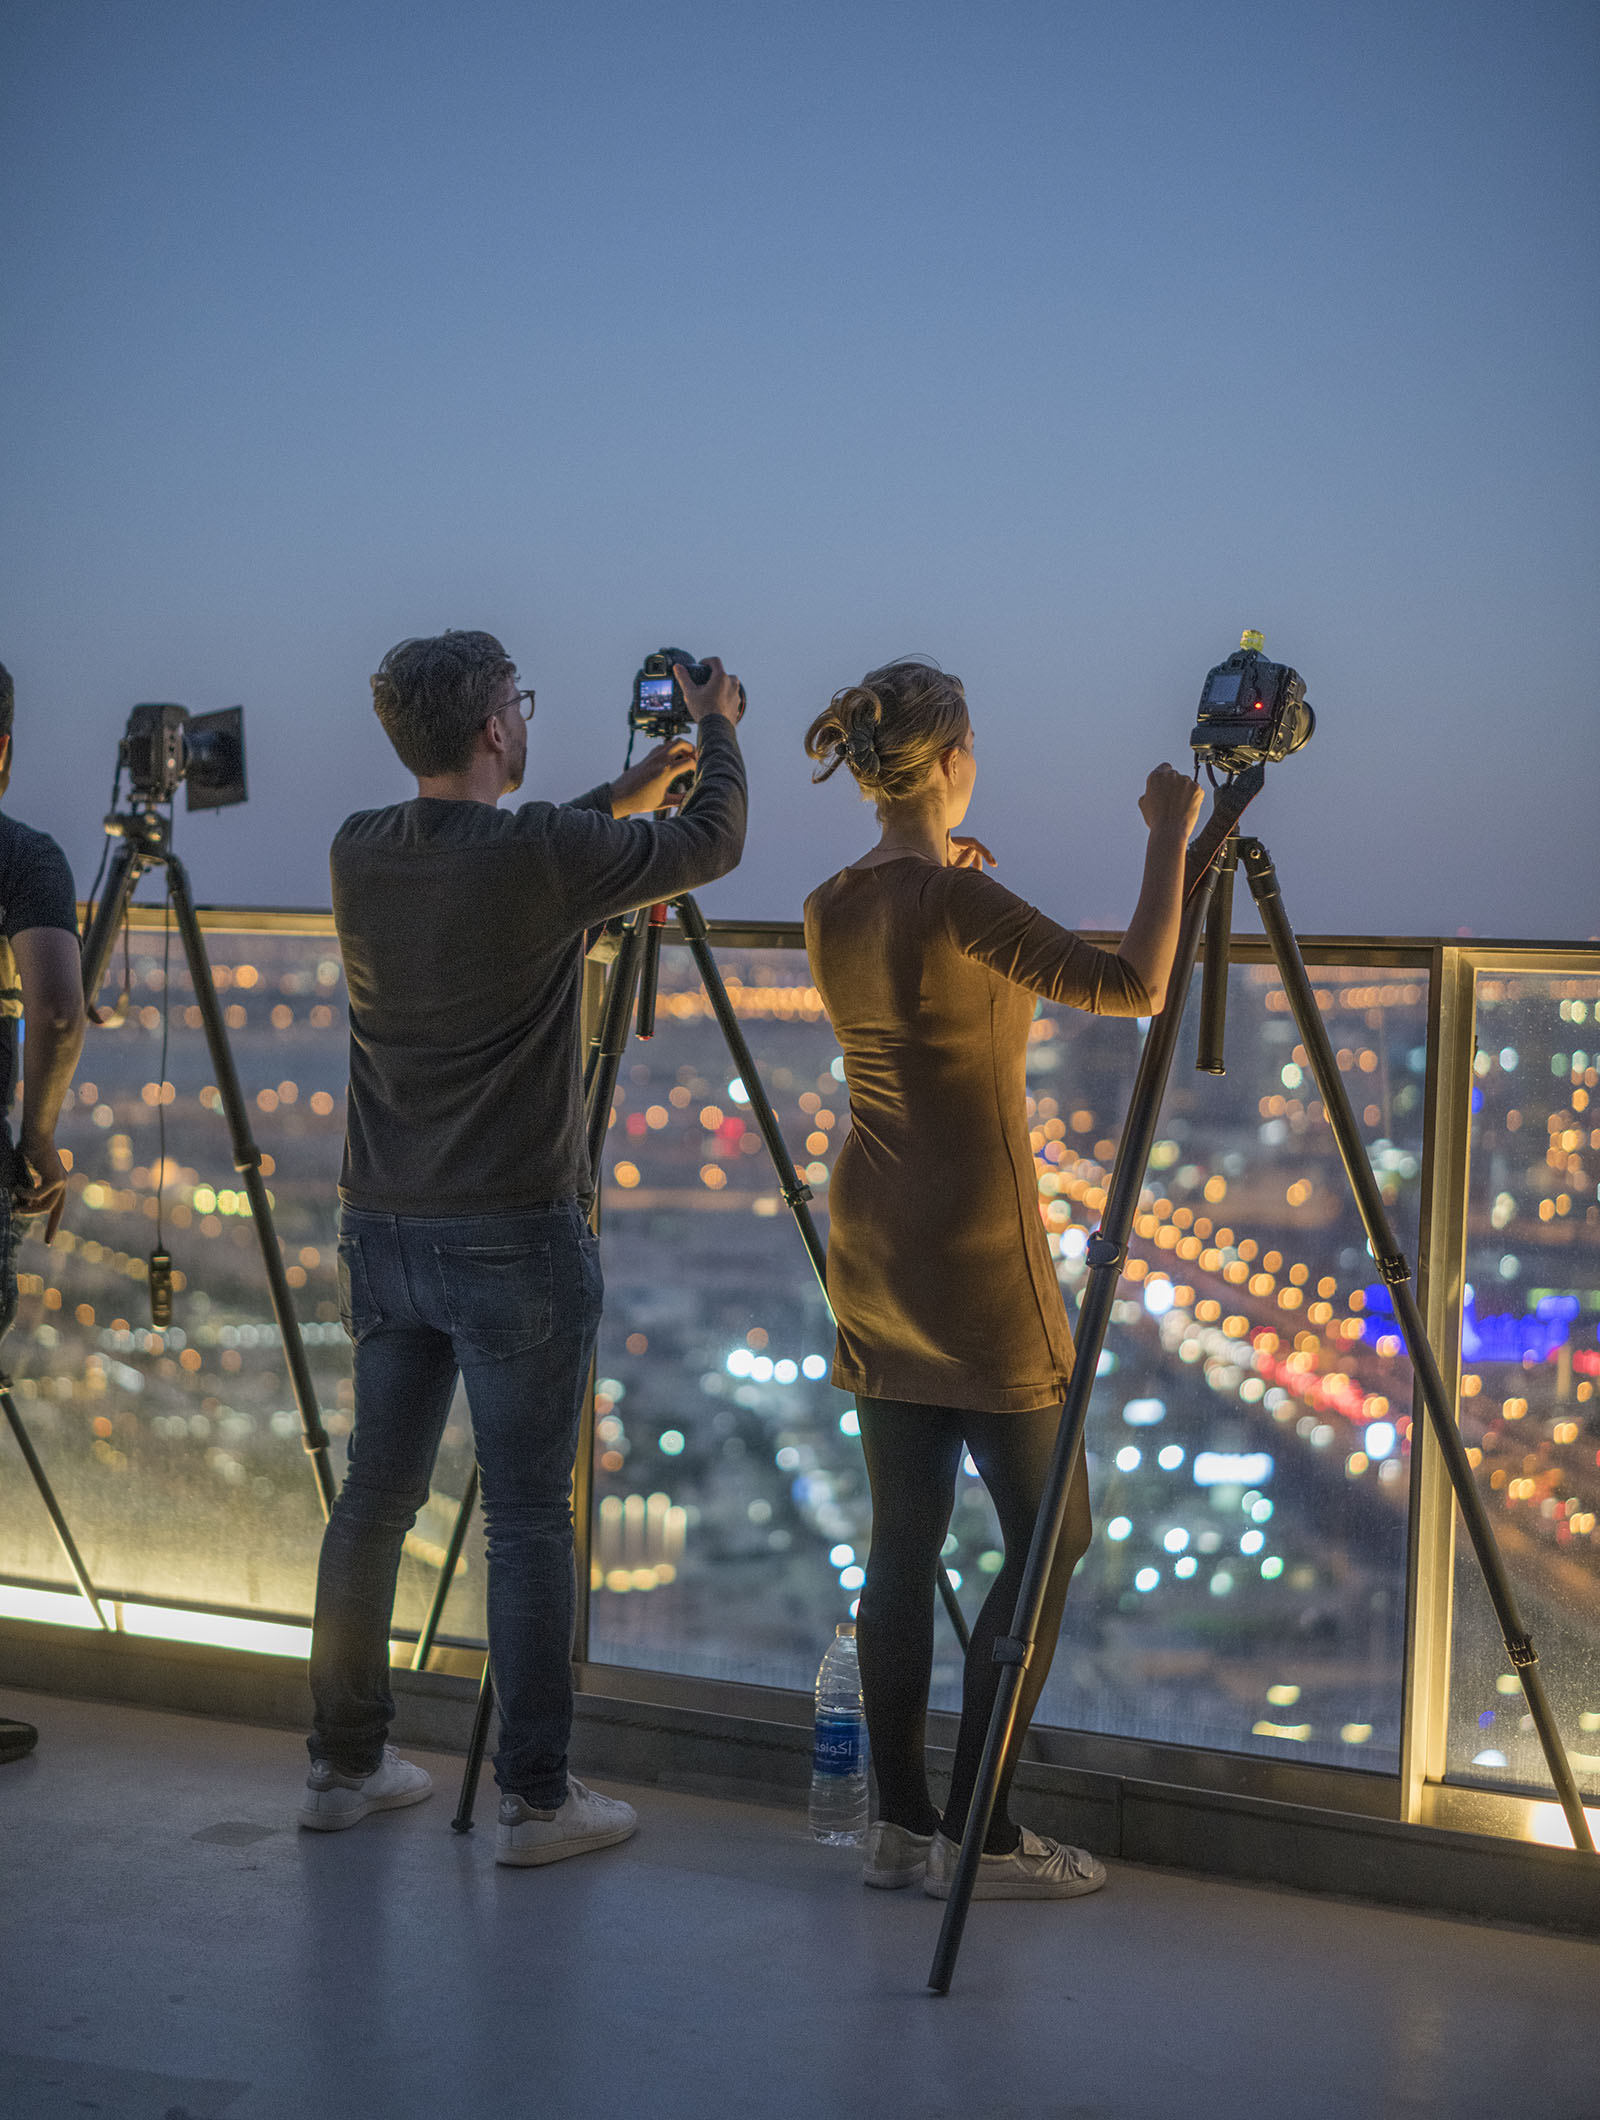 Dubai rooftop photography workshop